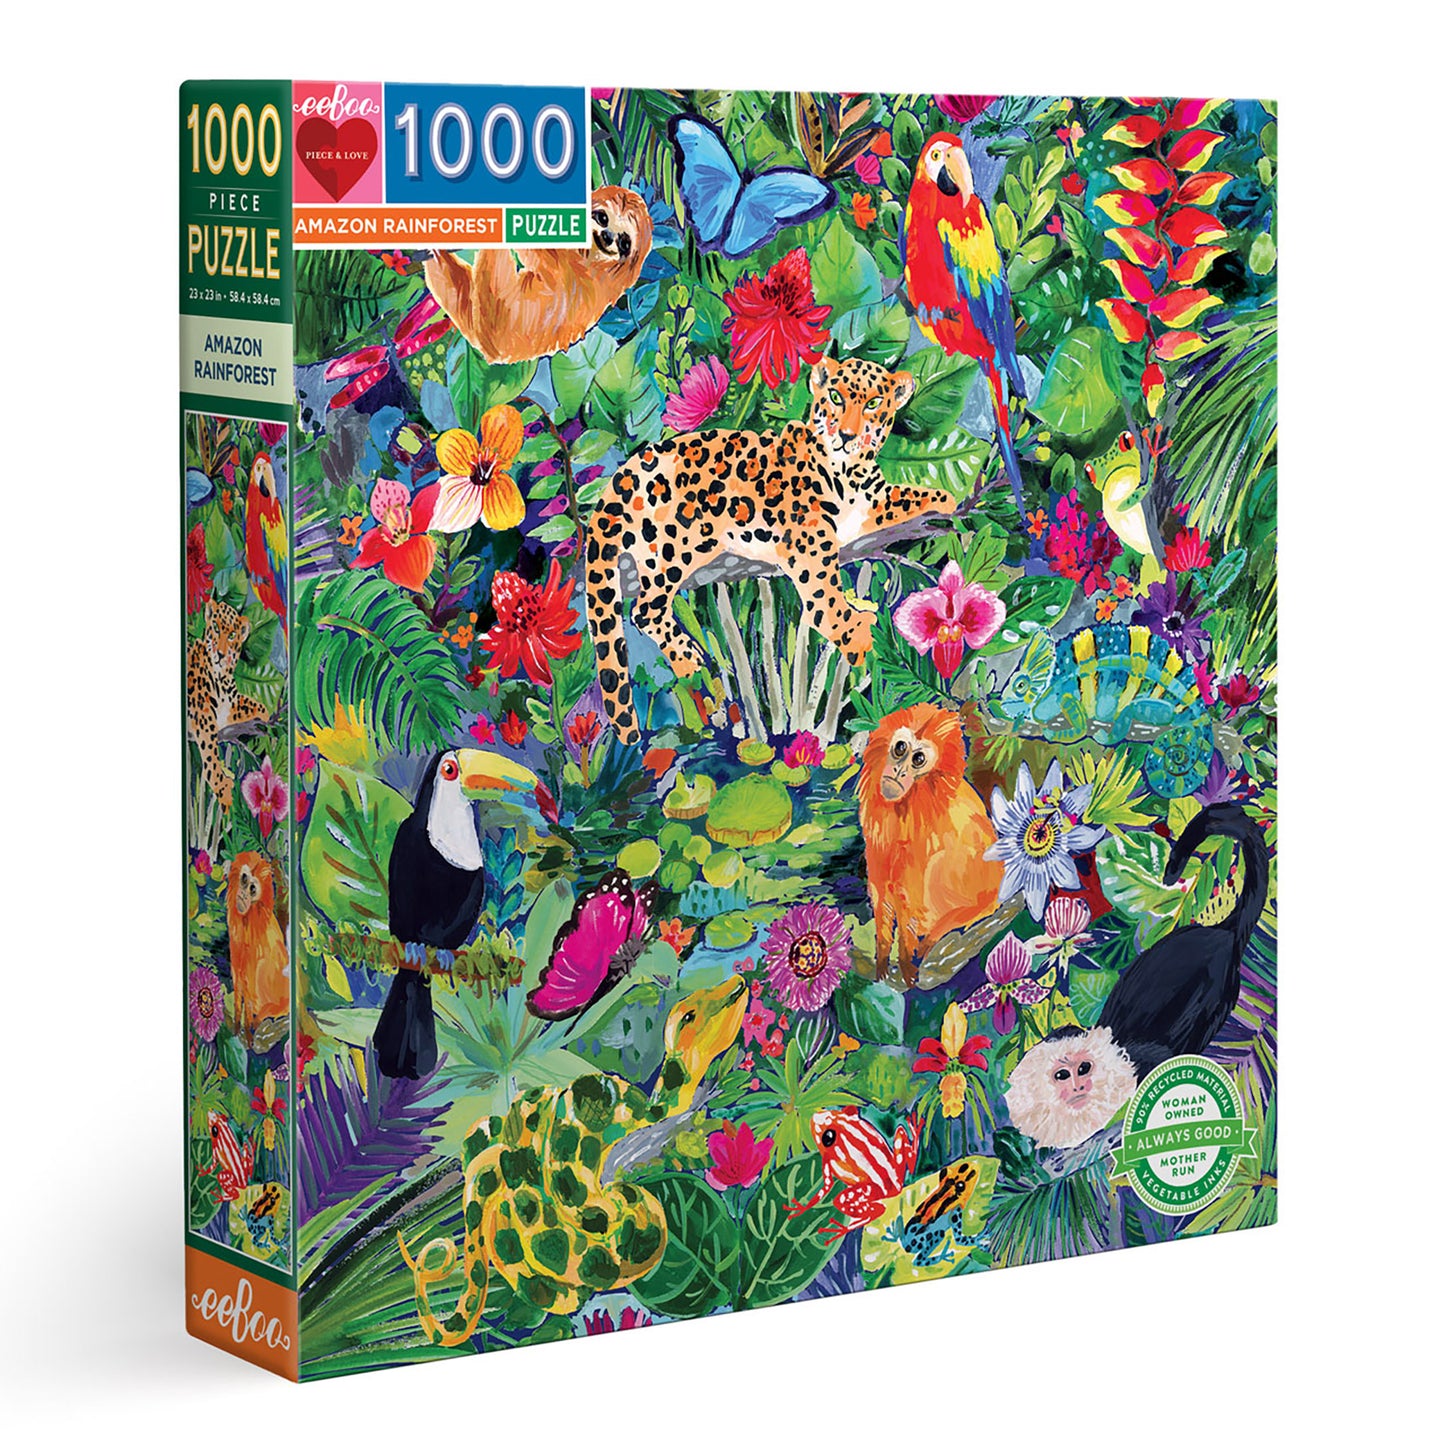 Amazon Animal Rainforest 1000 Piece Jigsaw Puzzle | eeBoo Piece & Love | Great Gift for Animal Lovers